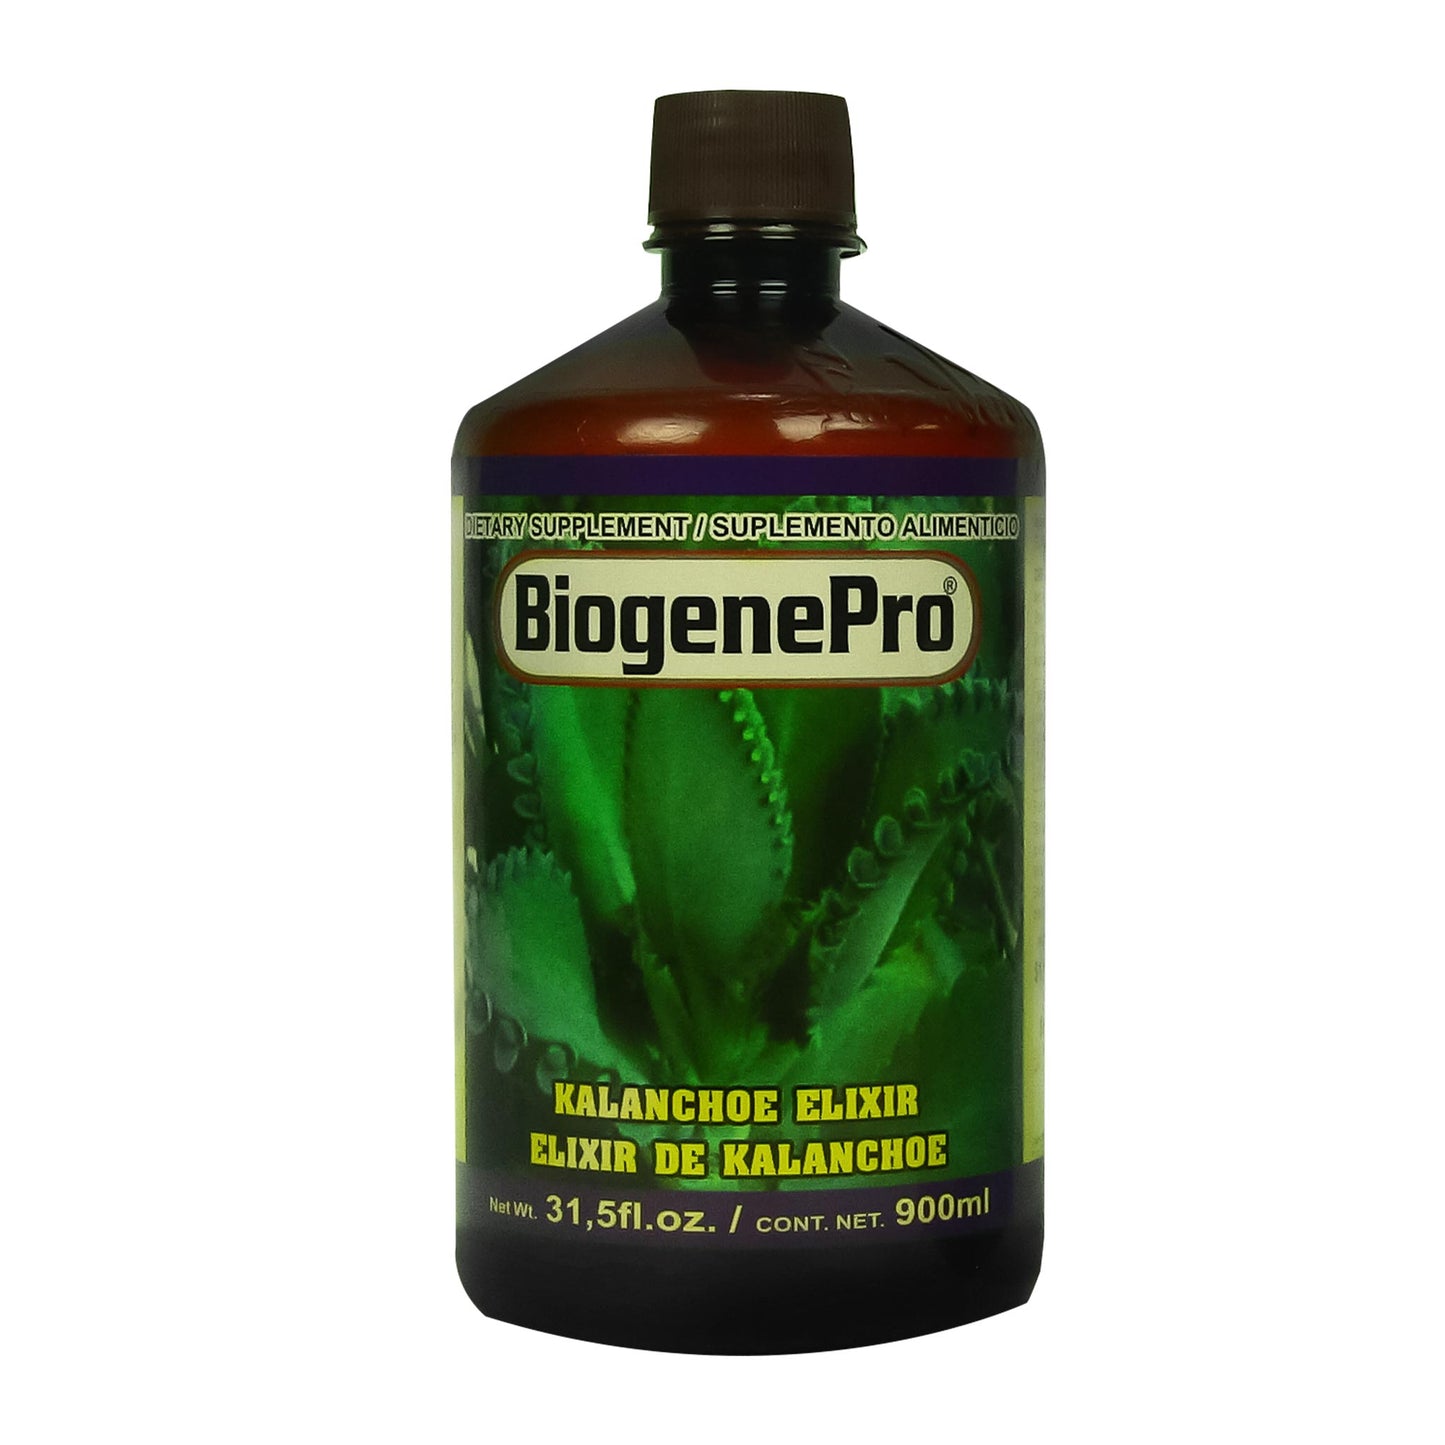 BIOGENEPRO ® elixir botella de 900ml